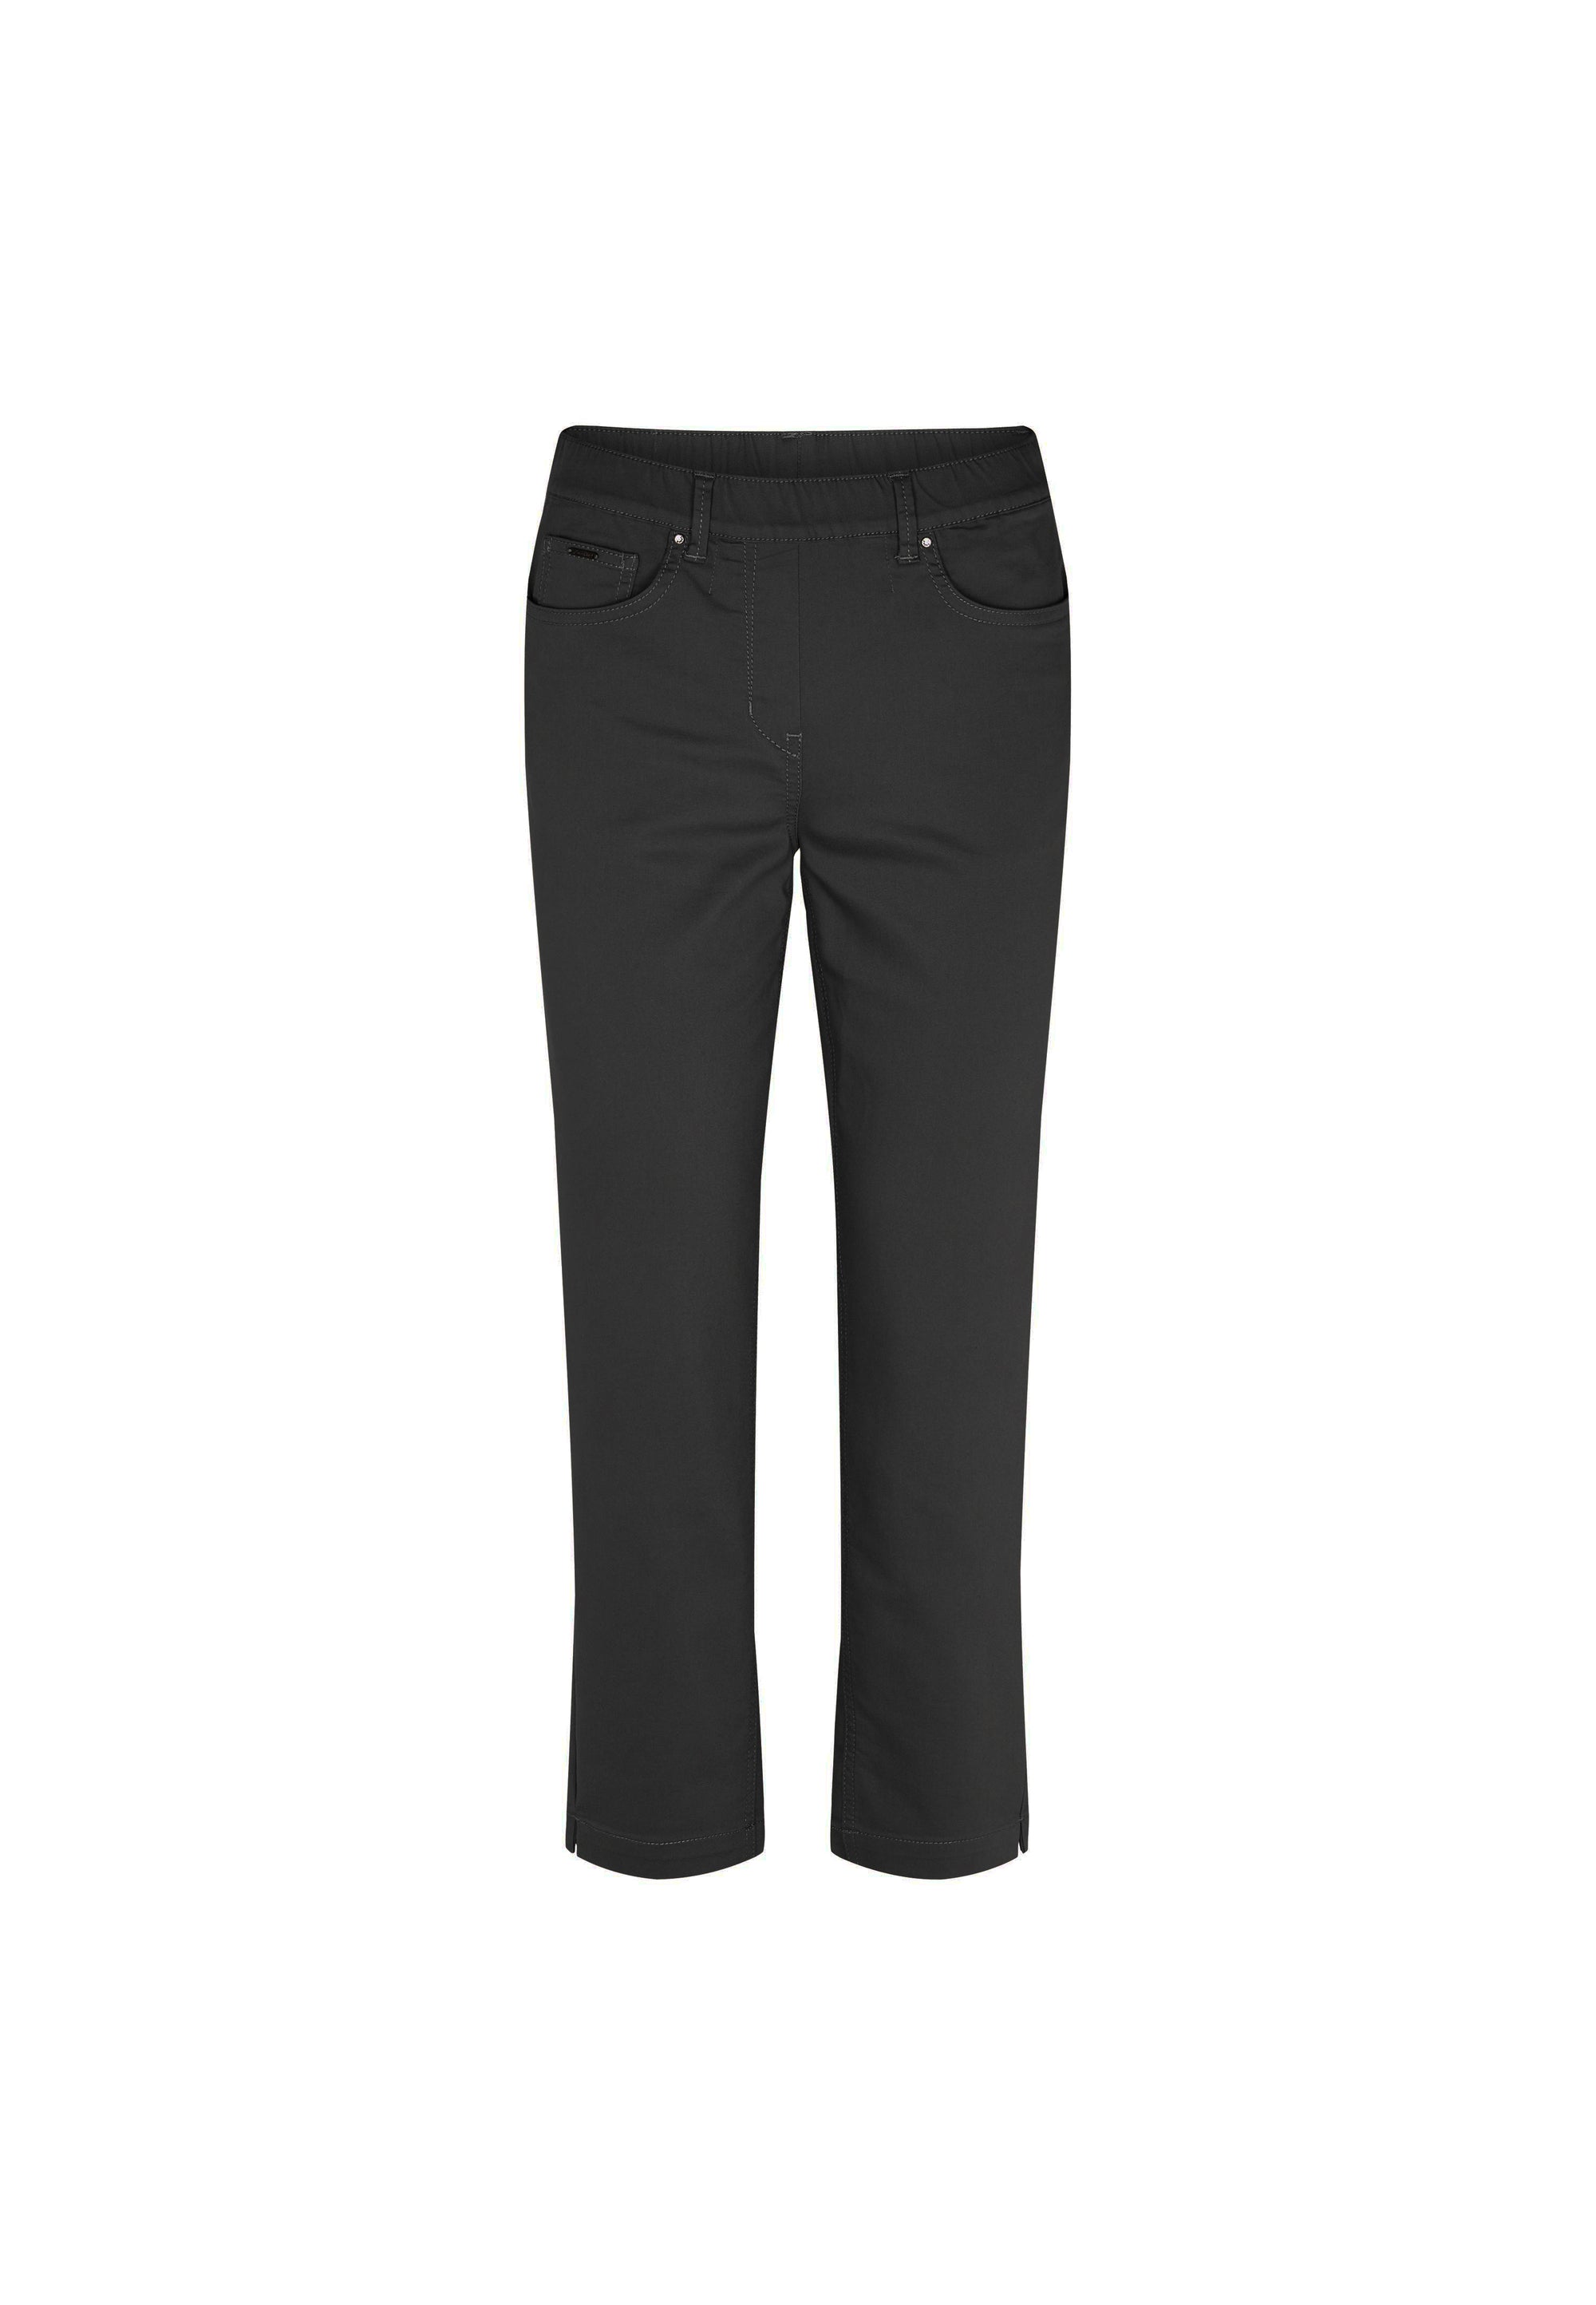 LAURIE Hannah Regular - Extra Short Length Trousers REGULAR 99000 Black